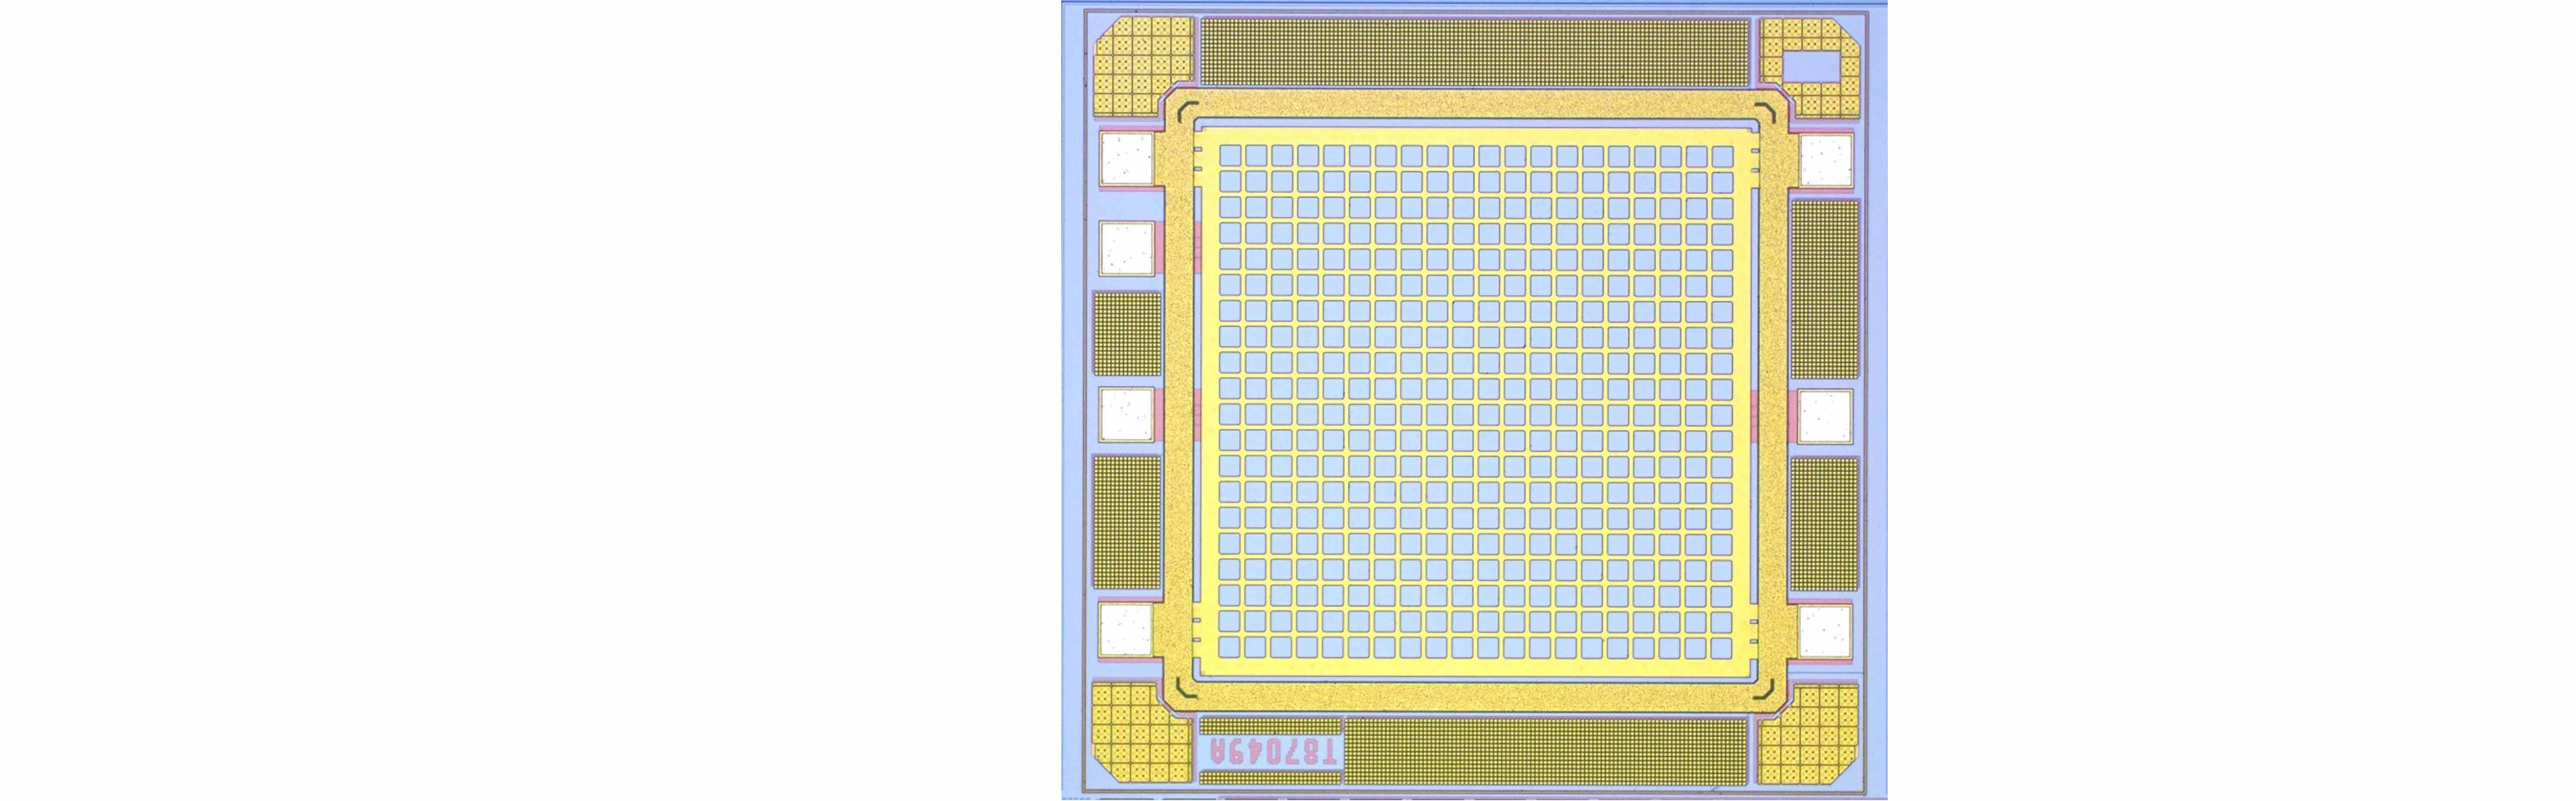 20 x 20 Pixel Analog Silicon Photomultiplier of Fraunhofer IMS